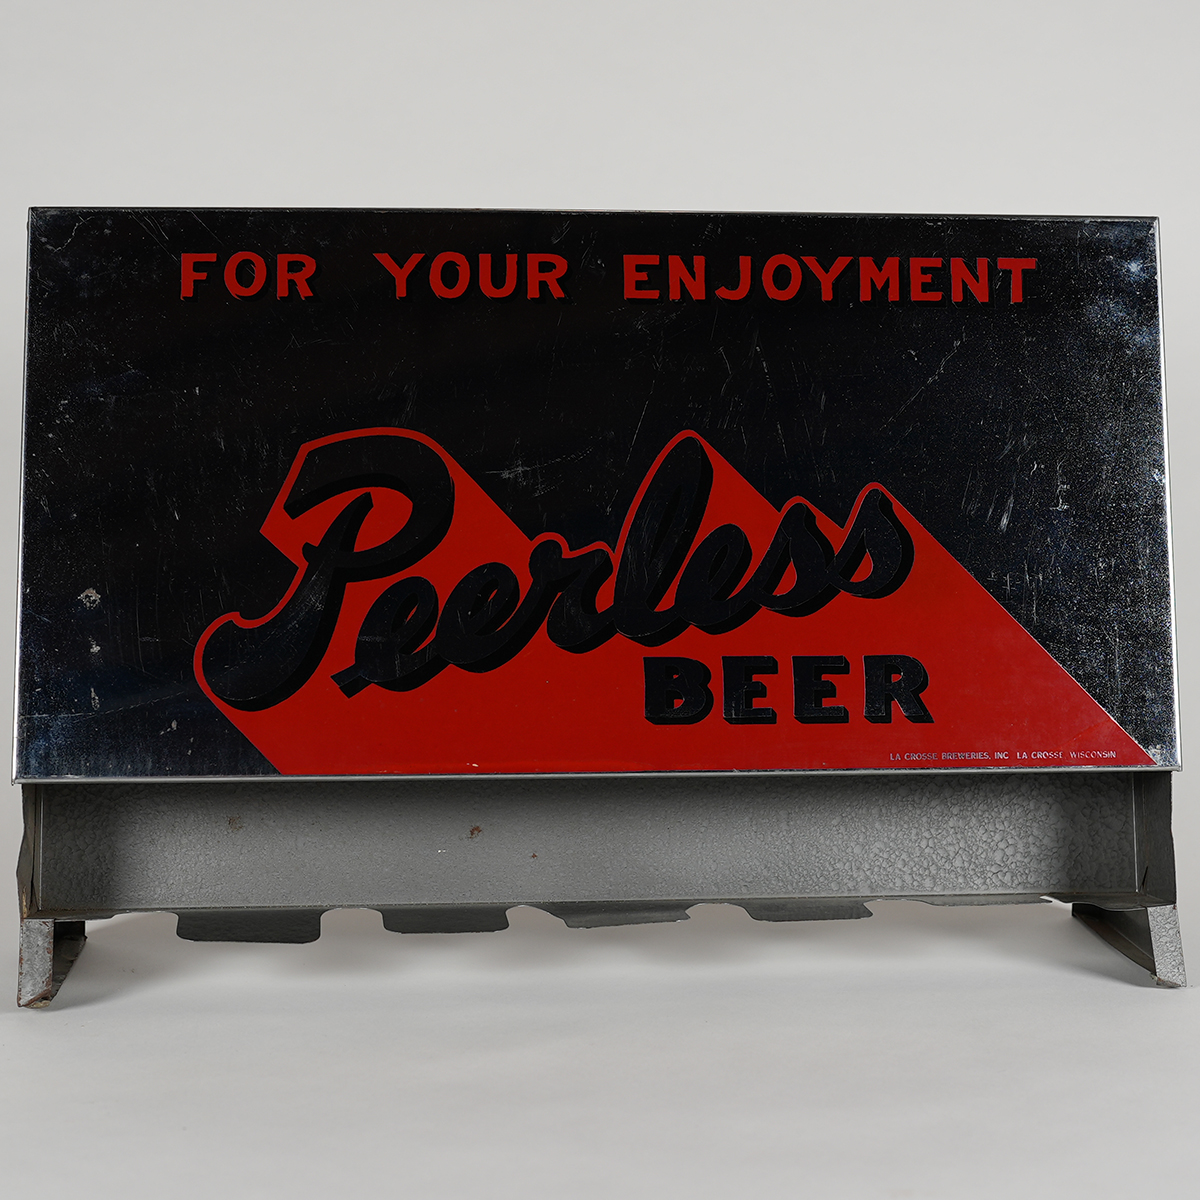 Peerless Beer For Your Enjoyment Advertising Display Case